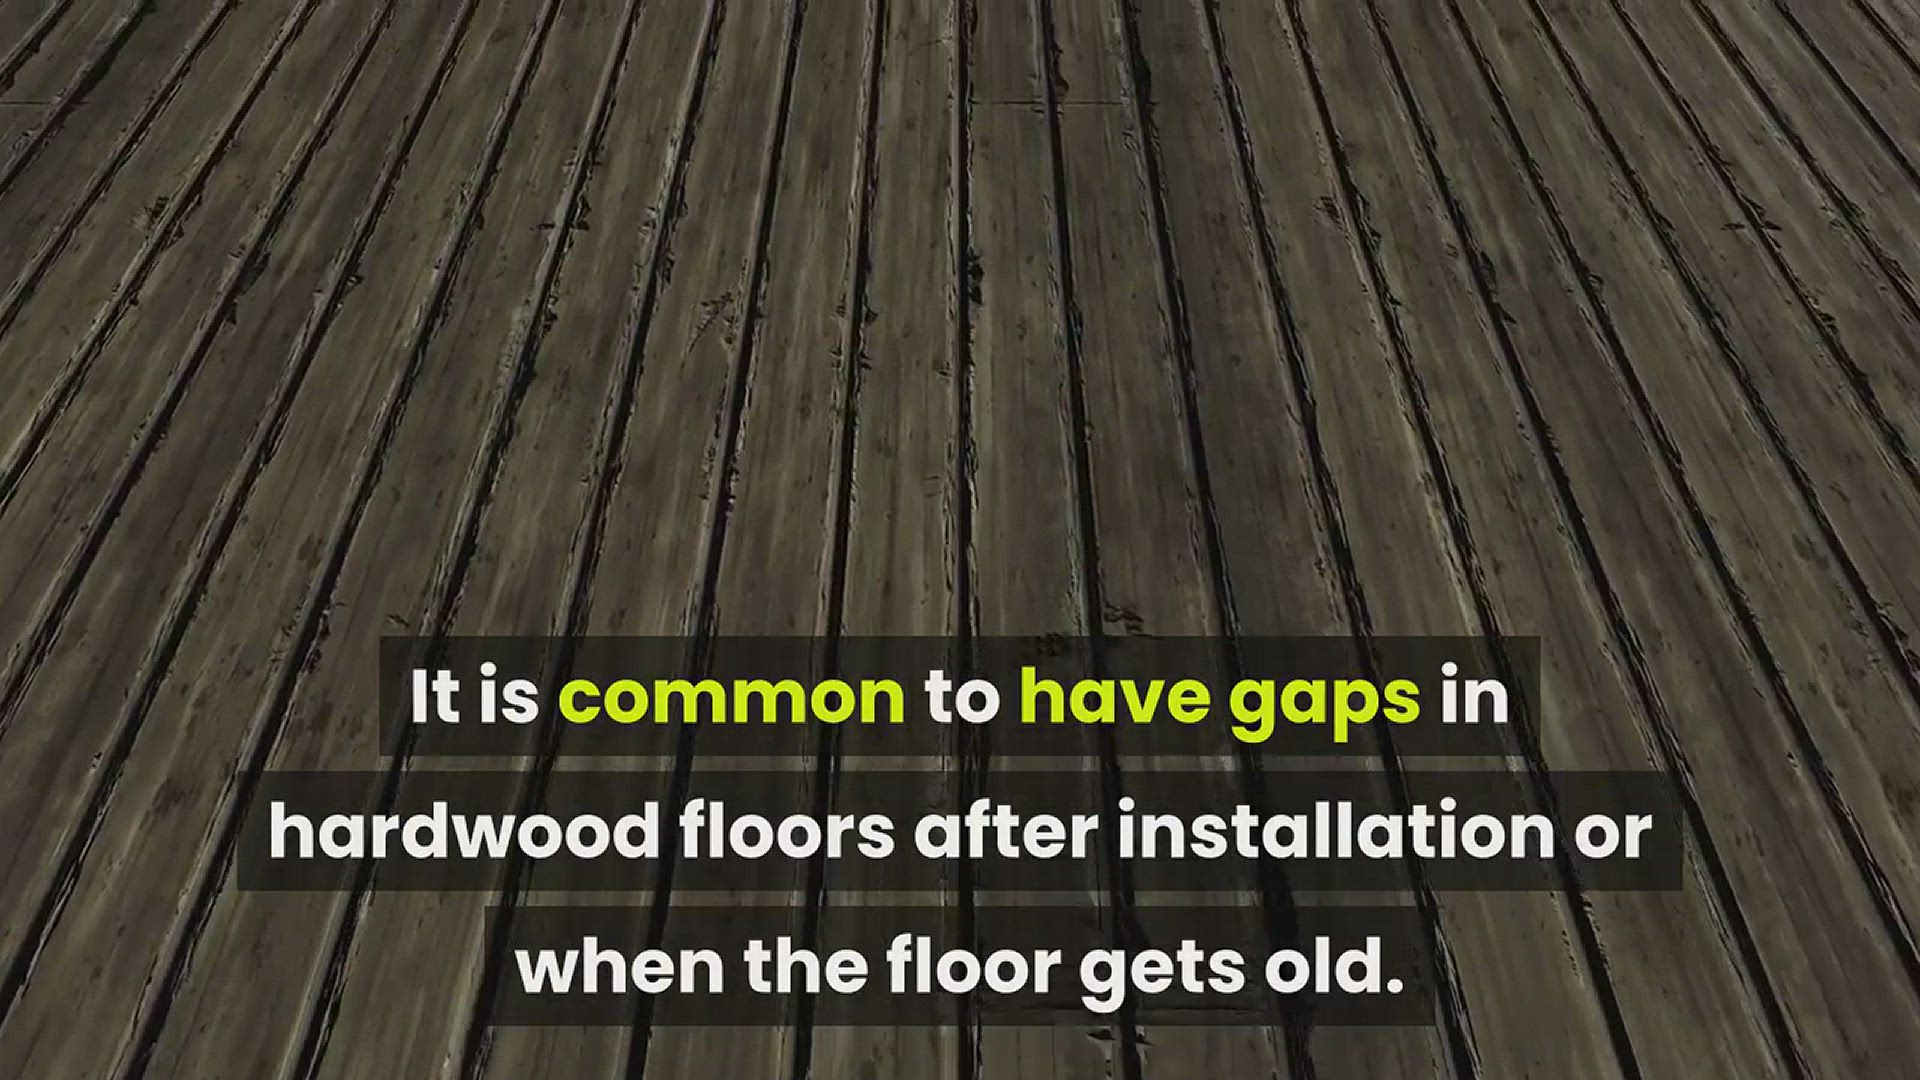 Dog Urine Soaked Into Hardwood Floors, How To Remove Dog Urine From Hardwood Floors